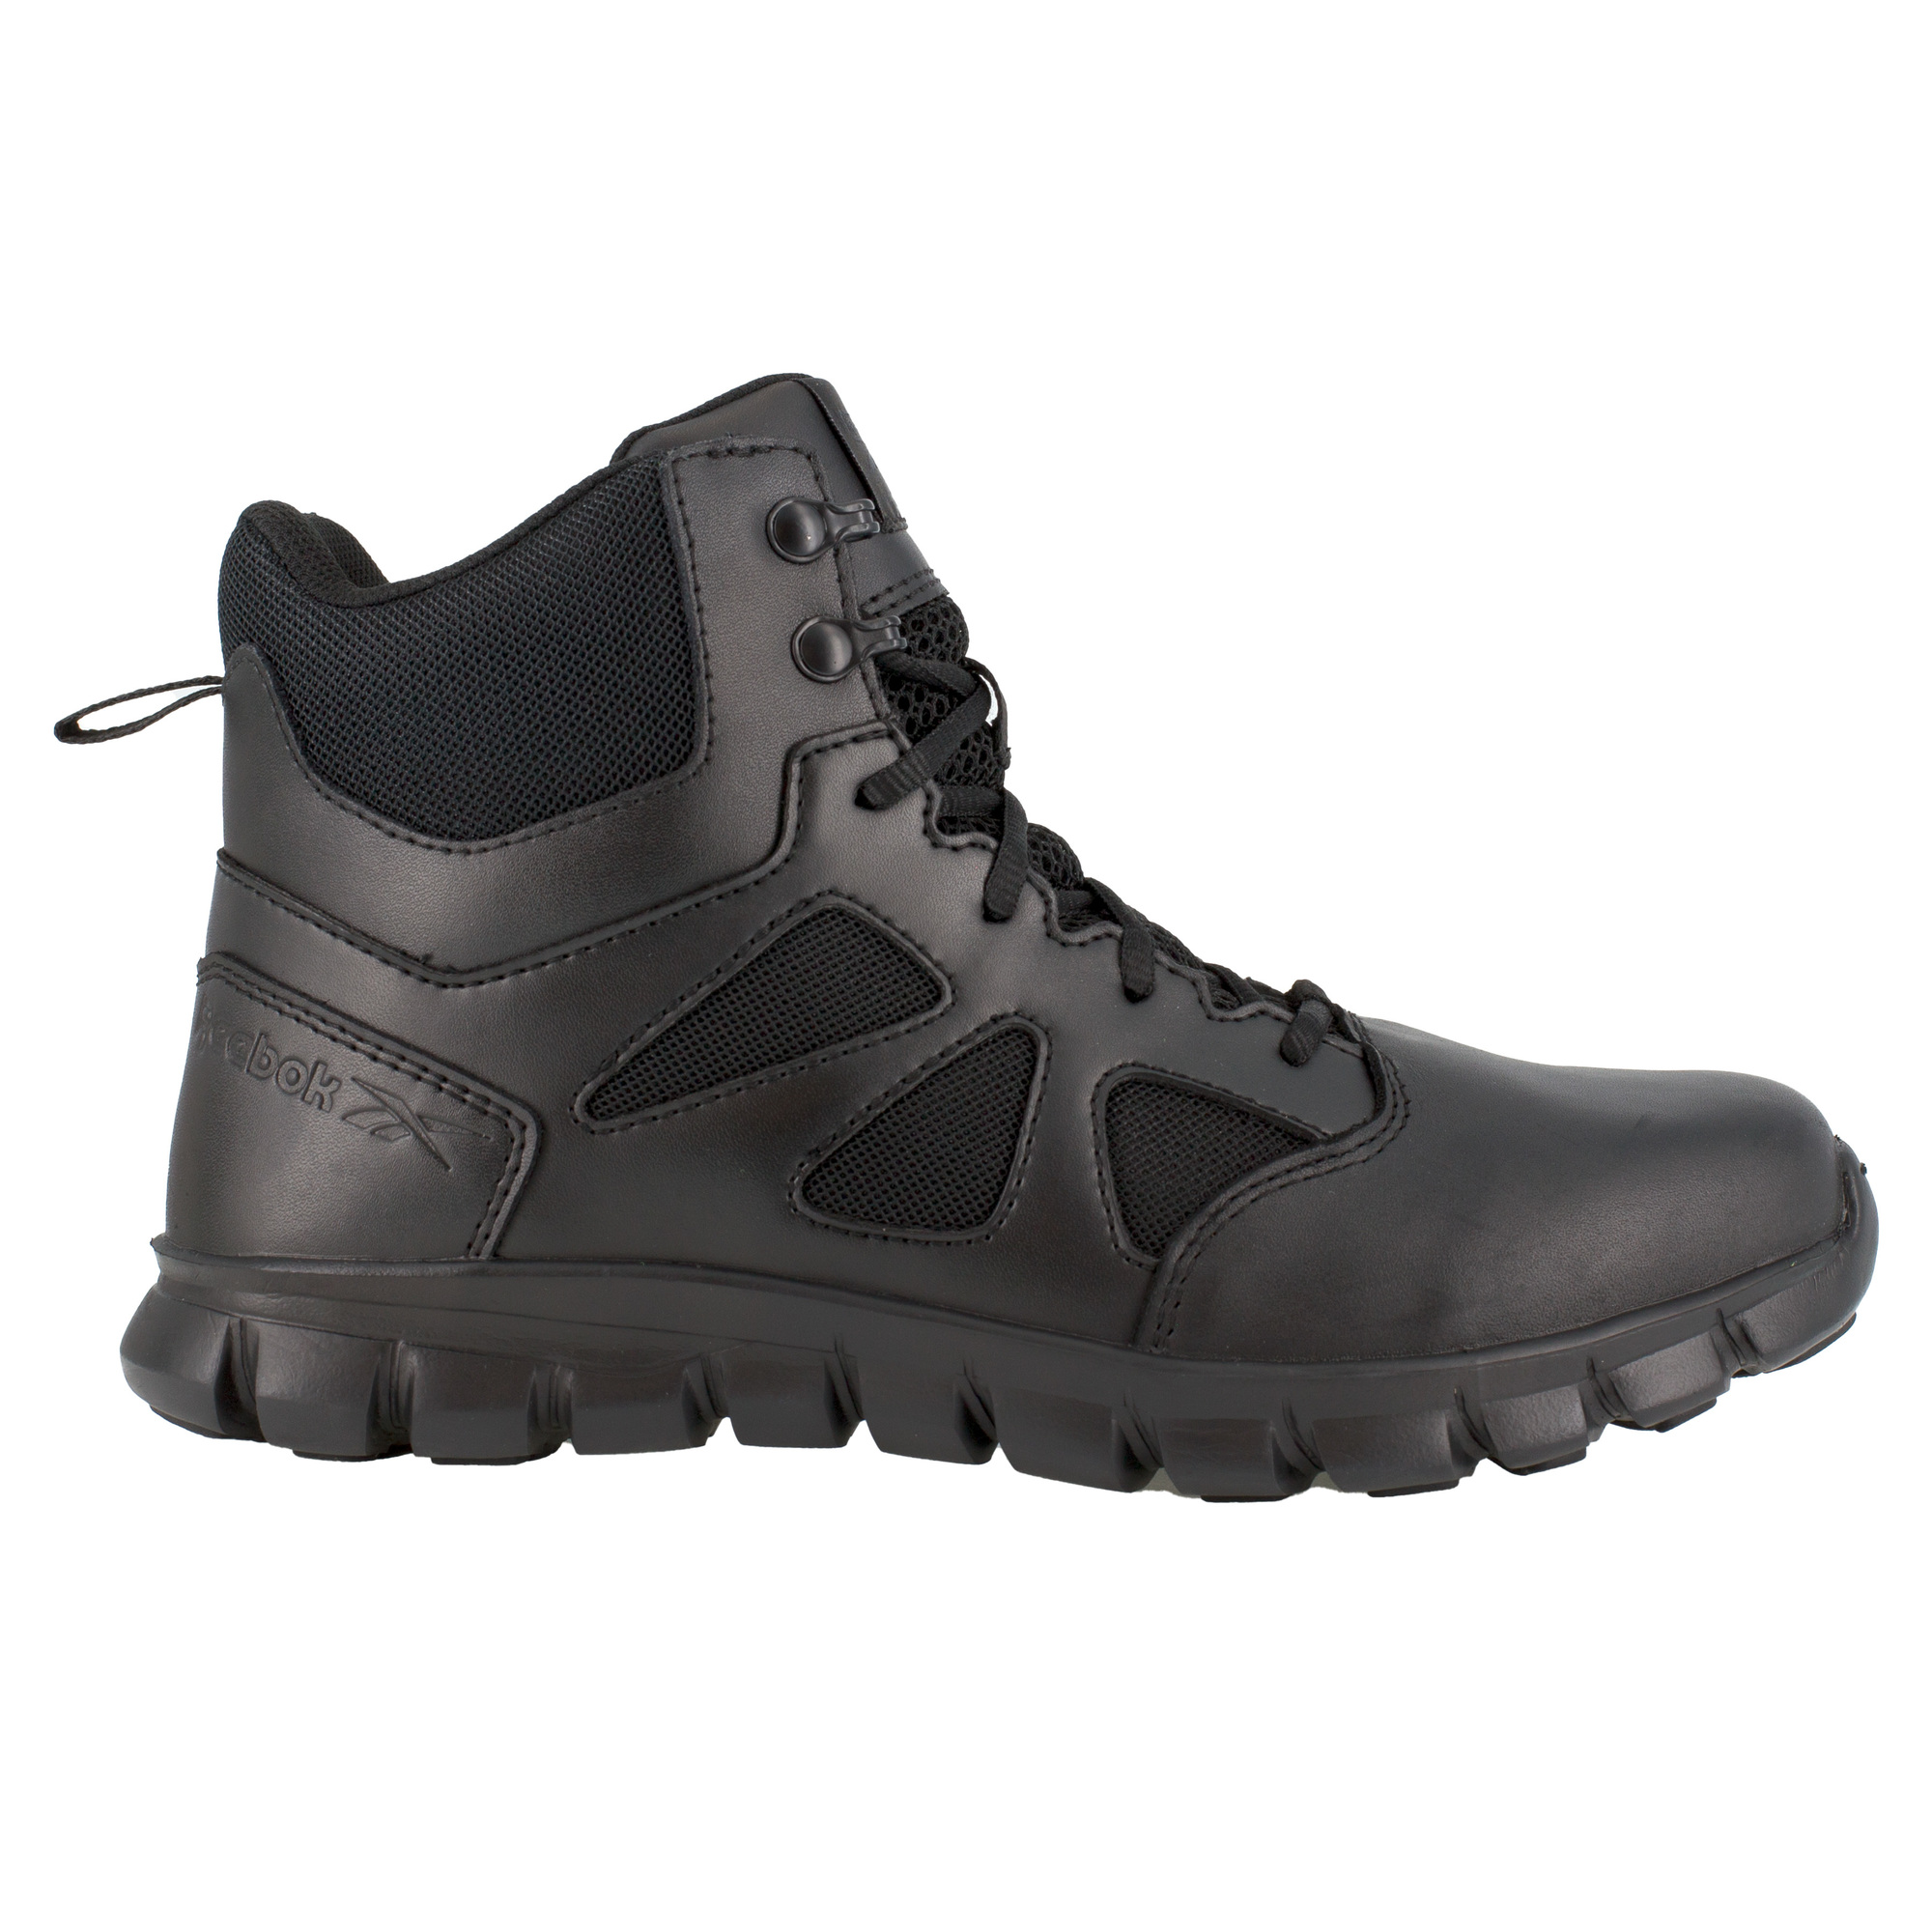 Reebok, 6Inch Tactical Boot w/Side Zipper, Size 9 1/2, Width Wide, Color Black, Model RB086